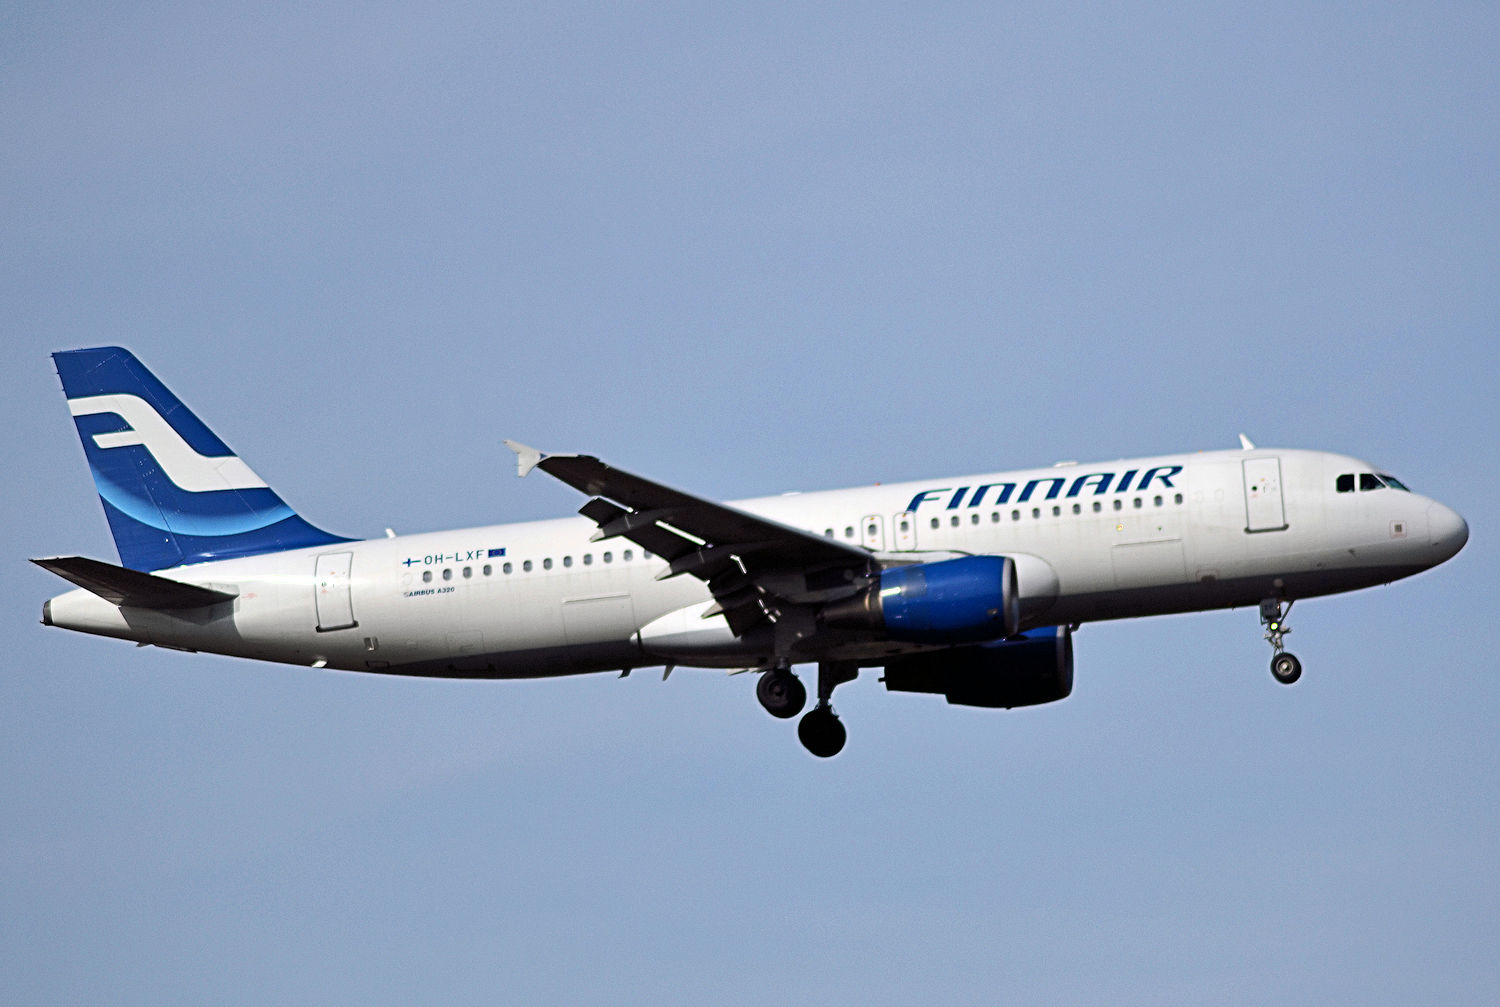 OH-LXF/OHLXF Finnair Airbus A320 Airframe Information - AVSpotters.com